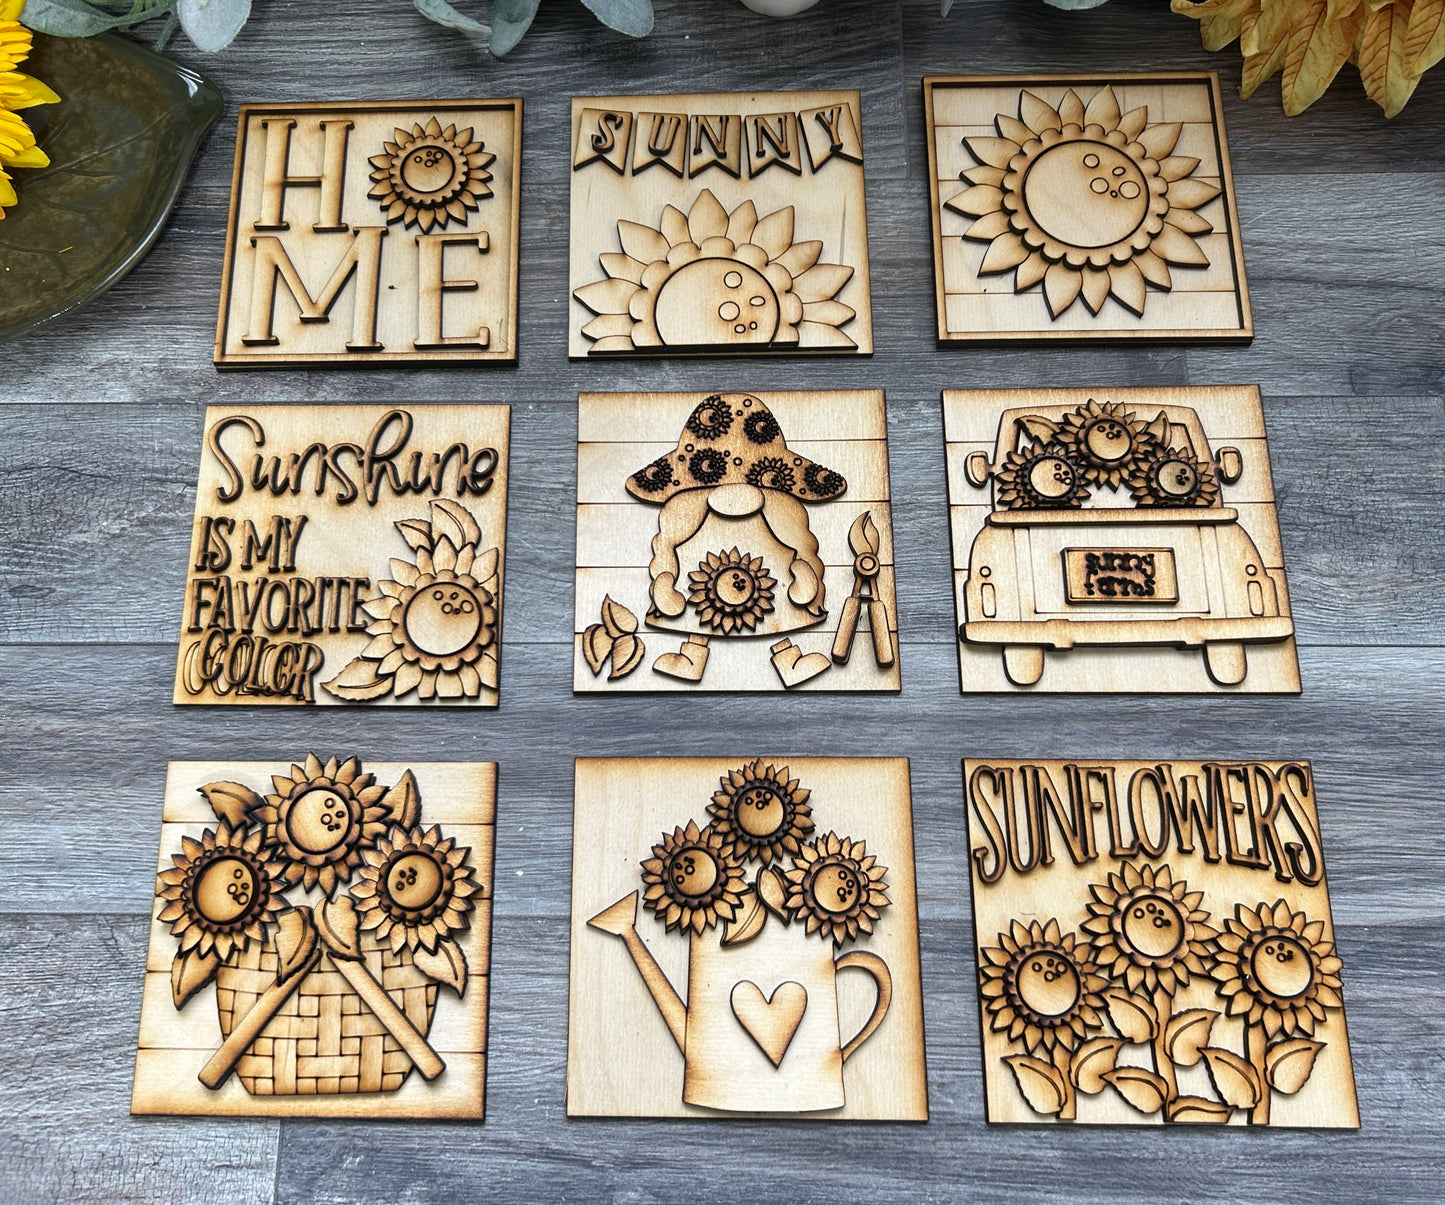 Kid's Craft Workshop - theme: Sunflowers